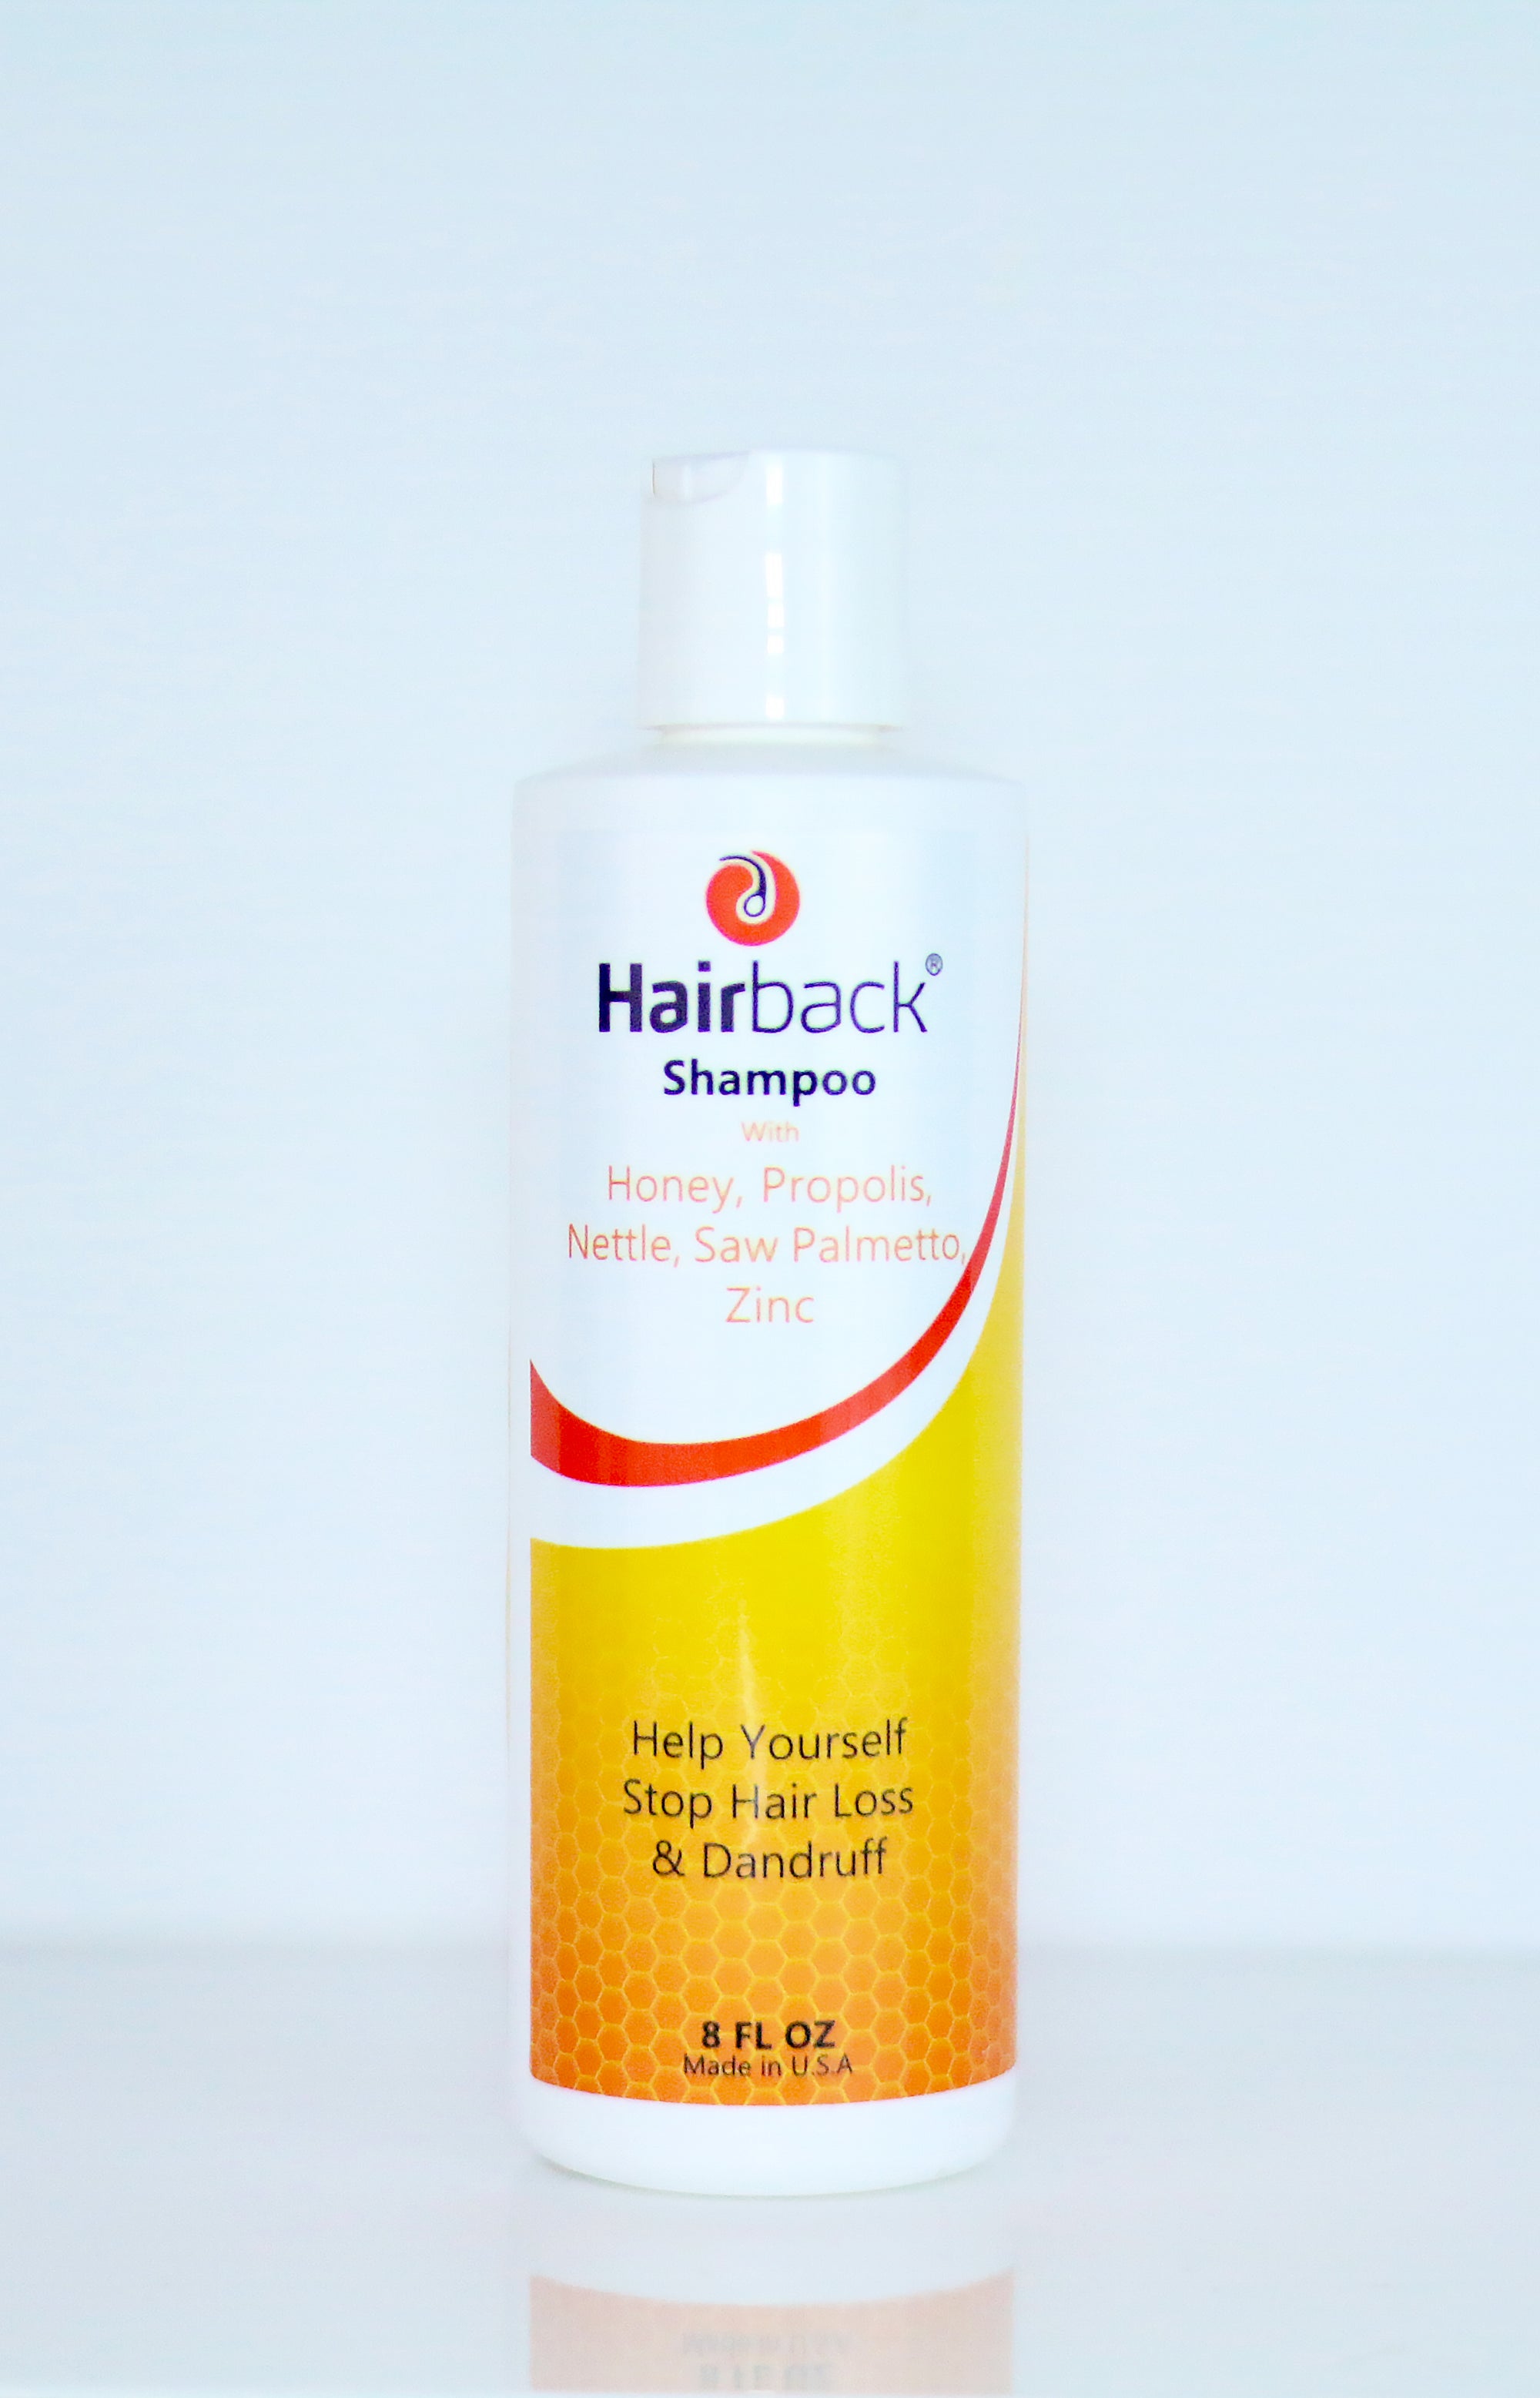 Hairback Shampoo (1 Year Supply)